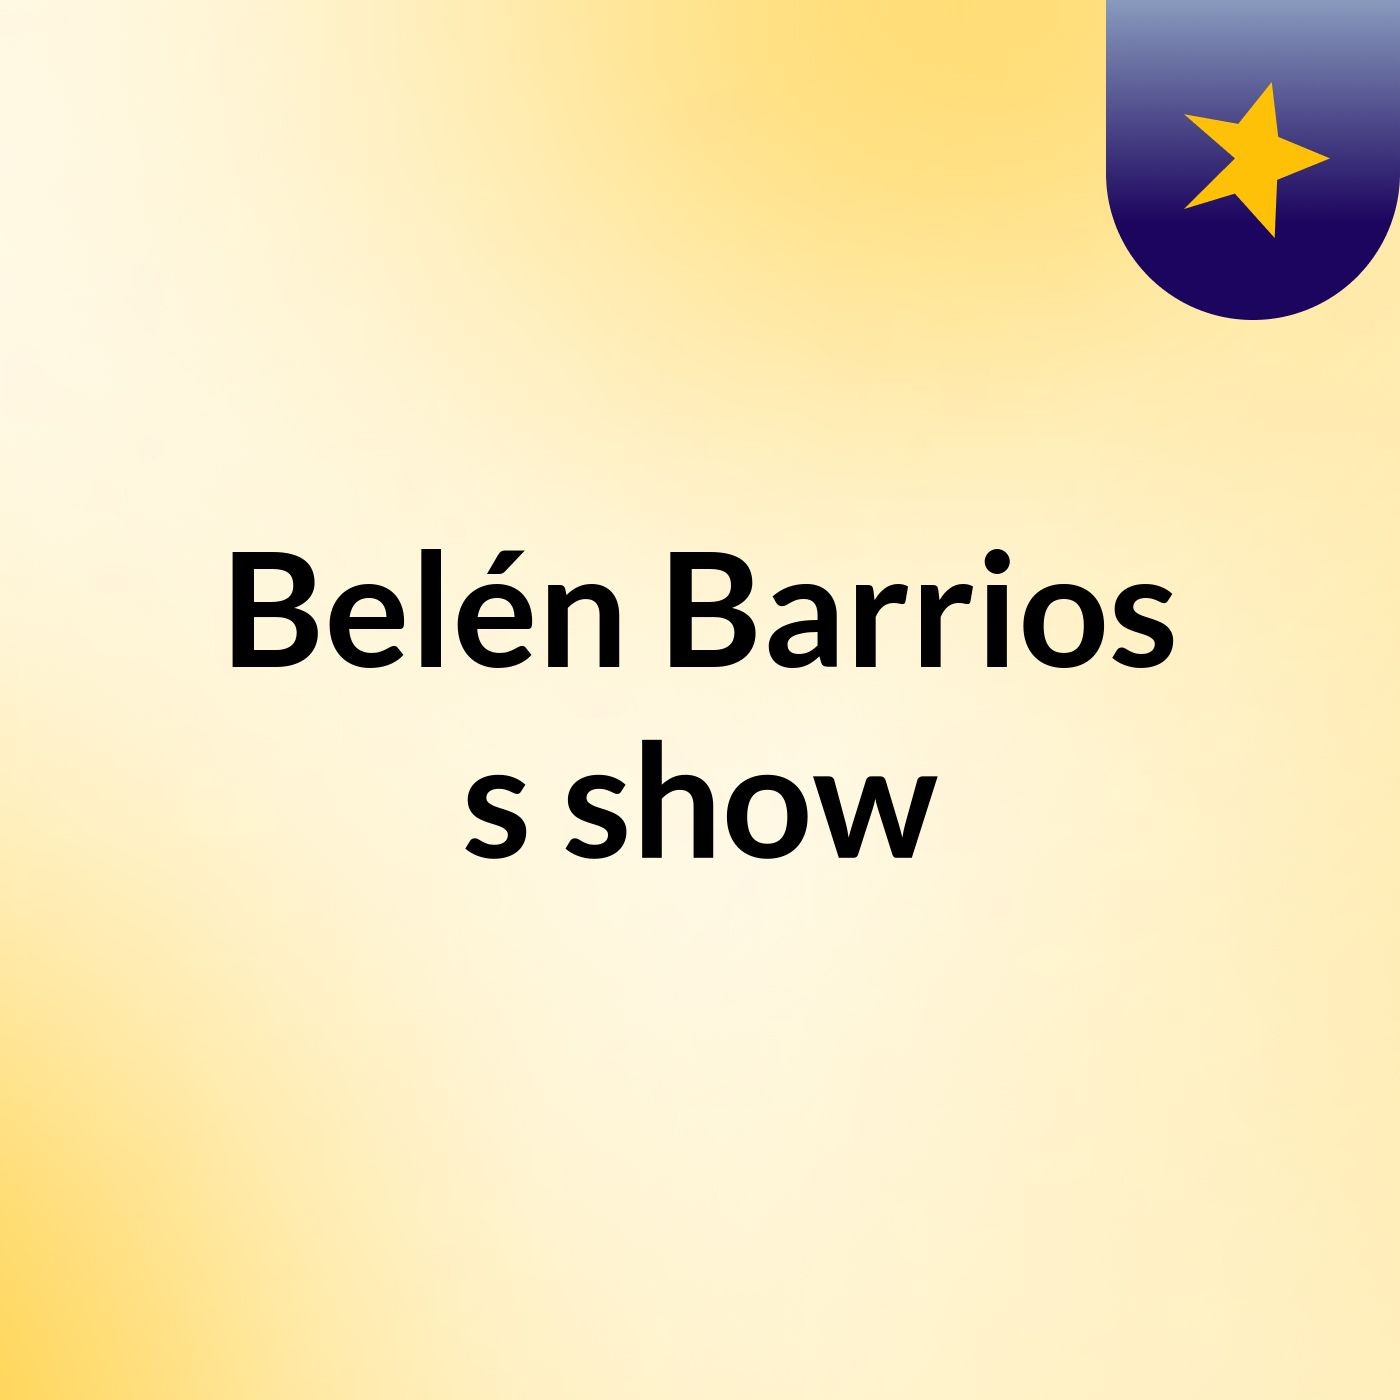 Belén Barrios's show